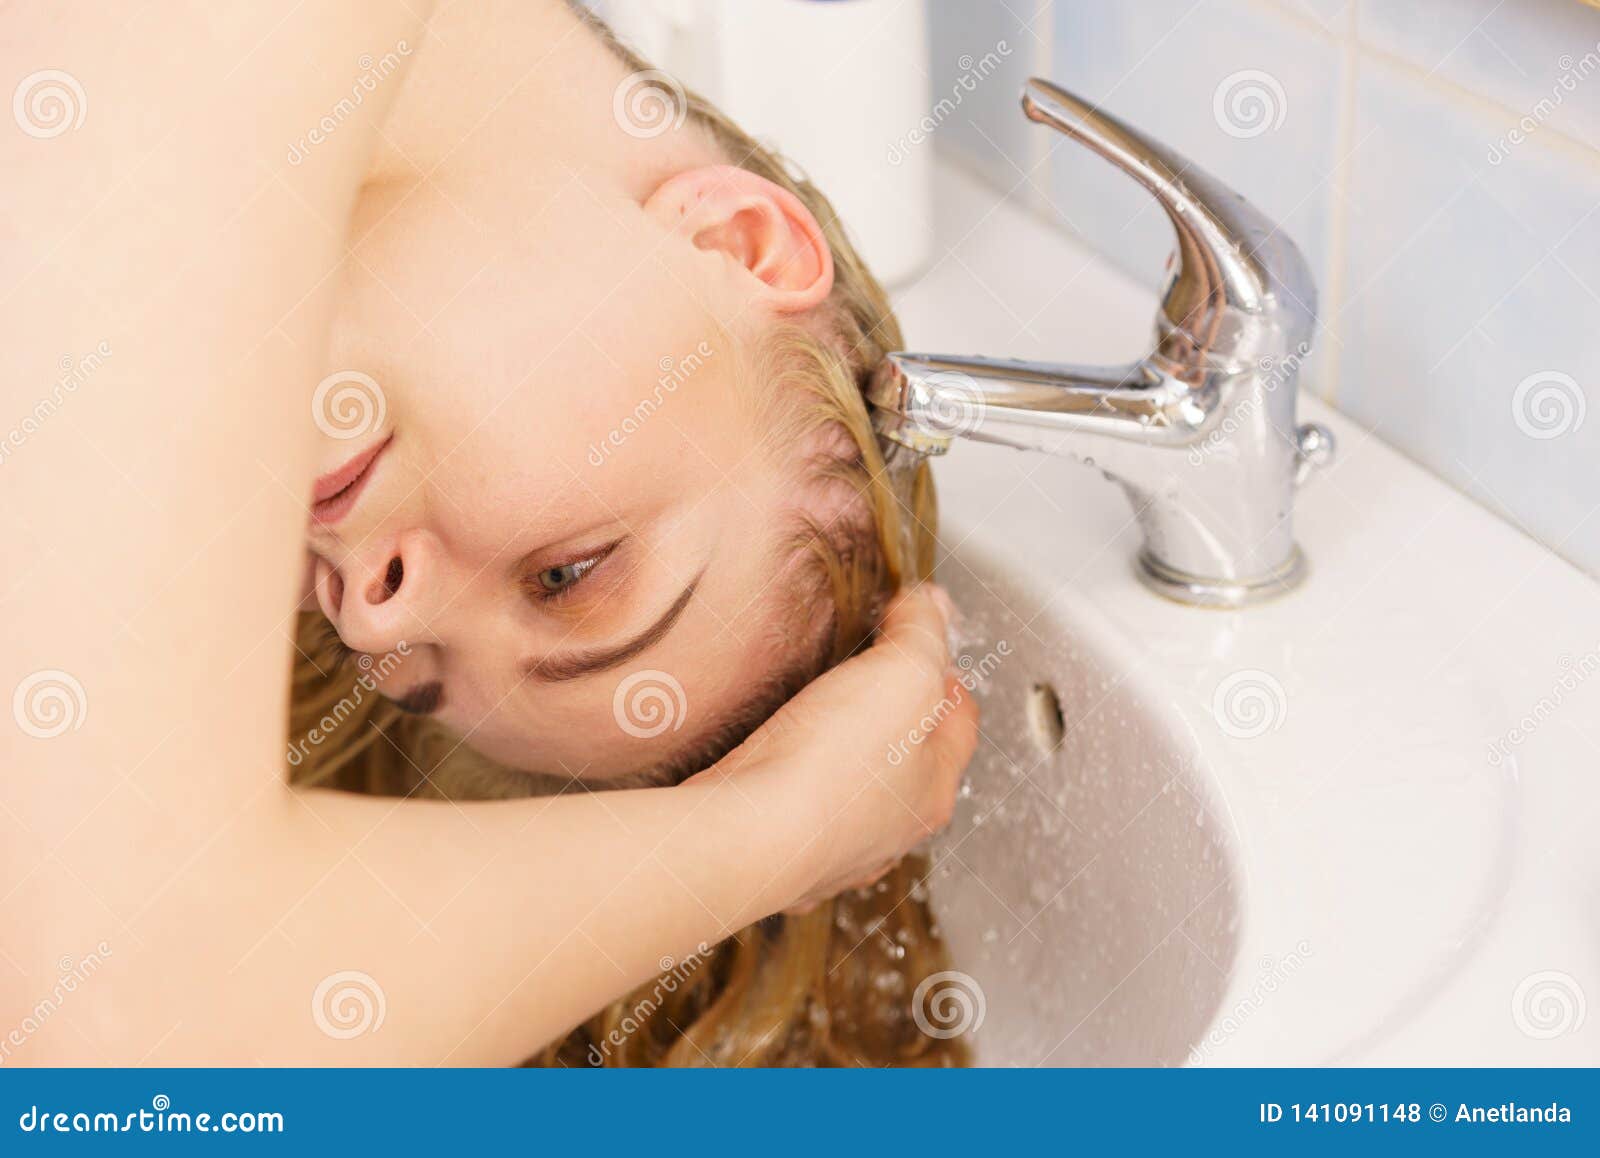 Woman Washing Hair In Bathroom Sink Stock Photo Image Of